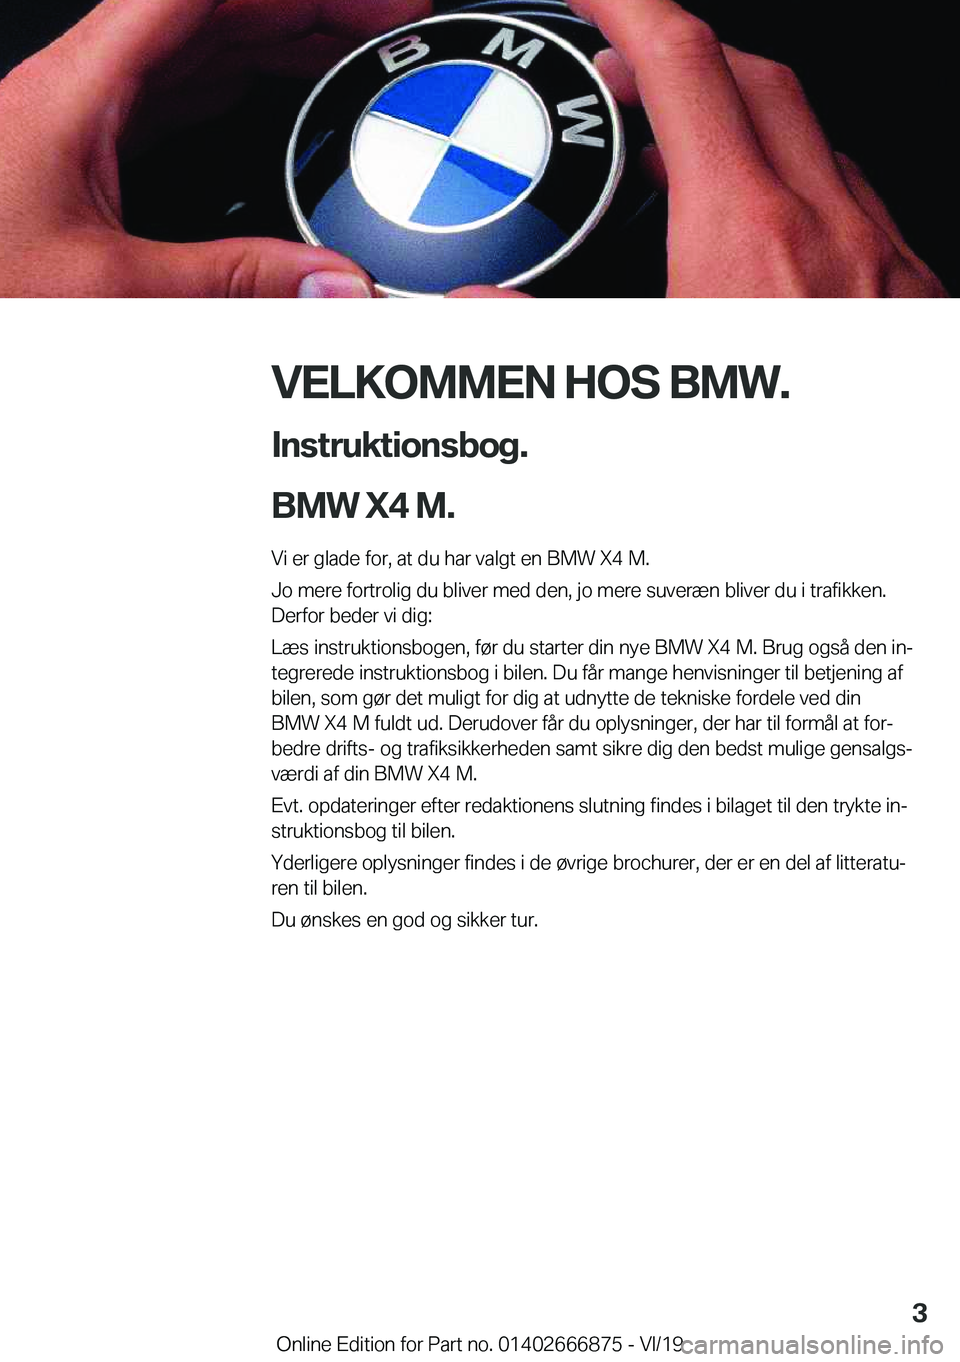 BMW X4 M 2020  InstruktionsbØger (in Danish) �V�E�L�K�O�M�M�E�N��H�O�S��B�M�W�.
�I�n�s�t�r�u�k�t�i�o�n�s�b�o�g�.
�B�M�W��X�4��M�. �V�i��e�r��g�l�a�d�e��f�o�r�,��a�t��d�u��h�a�r��v�a�l�g�t��e�n��B�M�W��X�4��M�.
�J�o��m�e�r�e��f�o